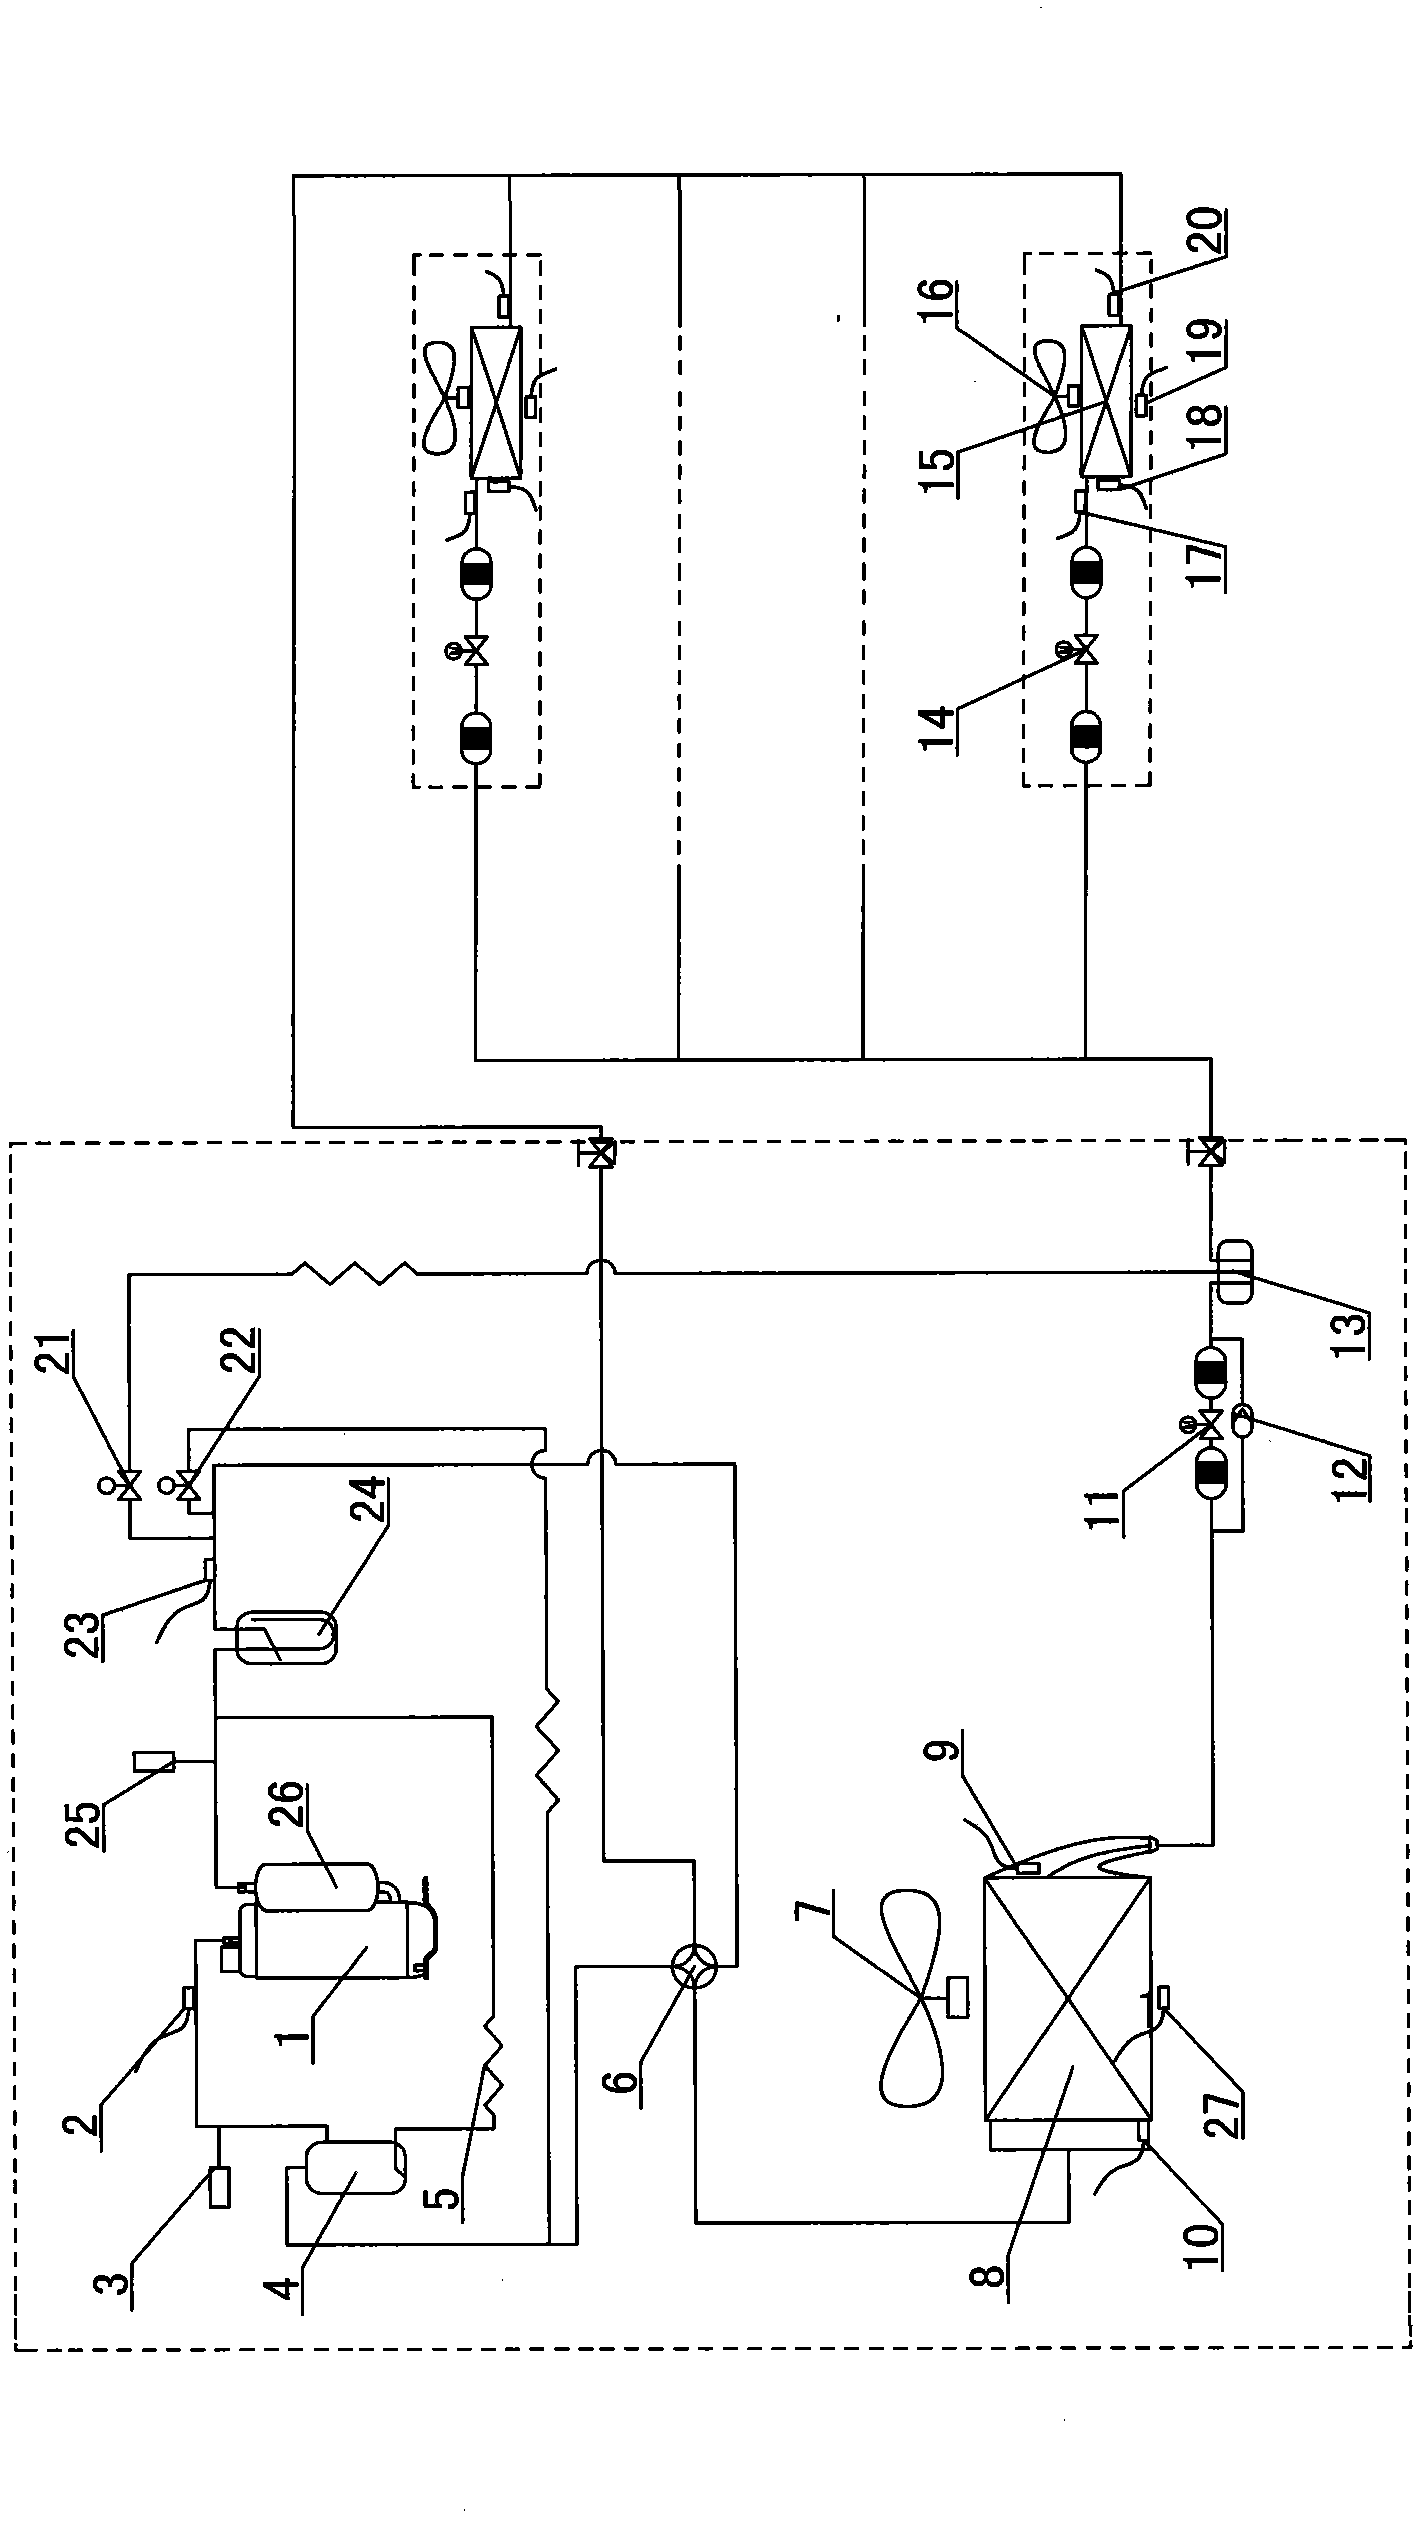 Method for regulating normal operating frequency of DC inverter compressor